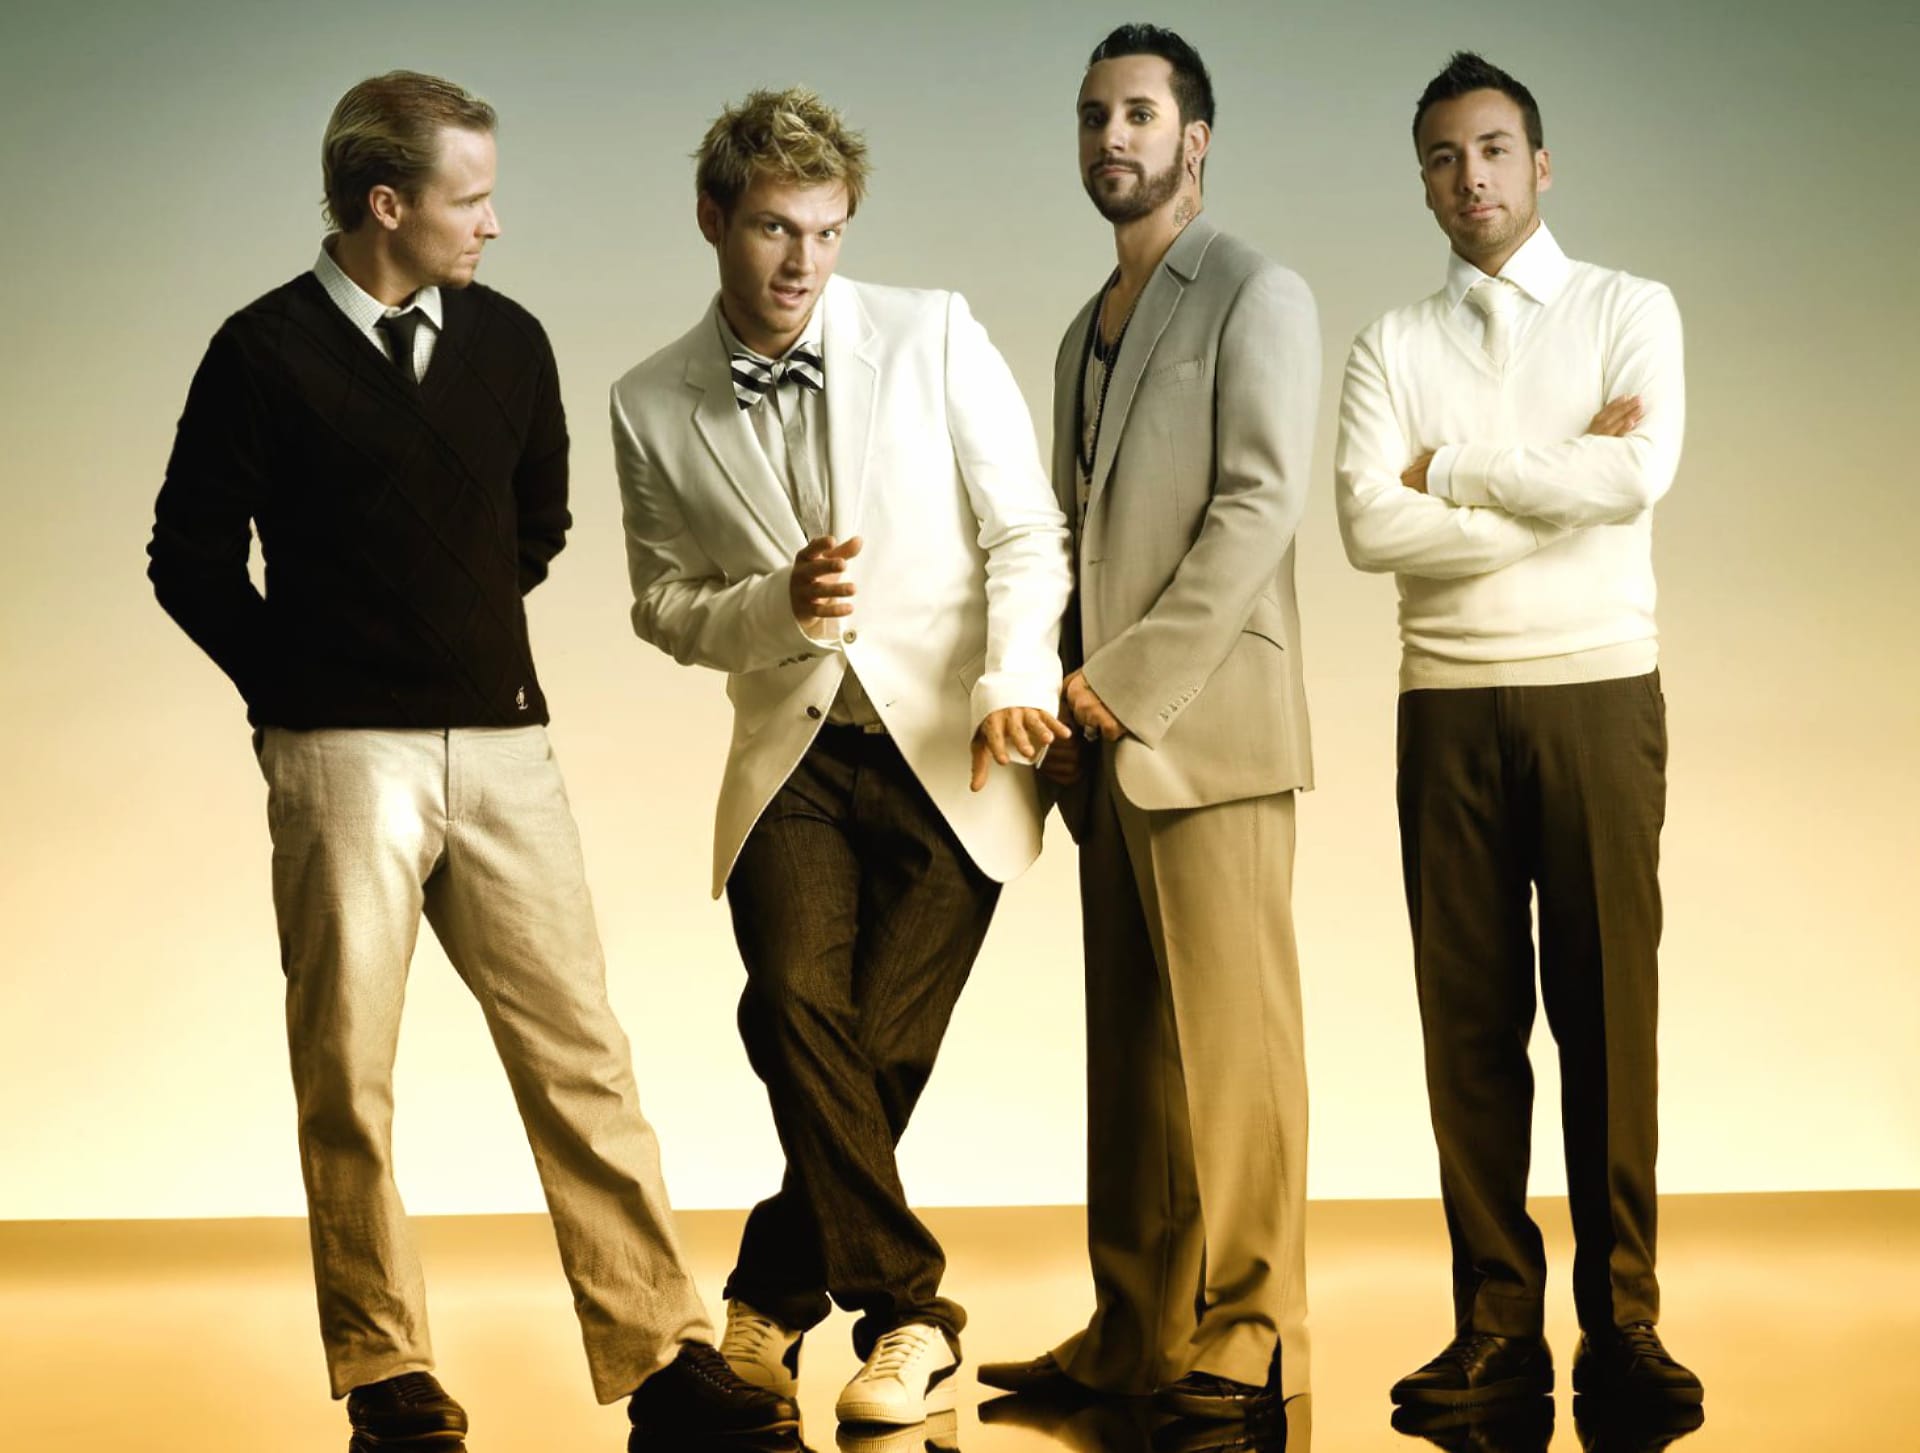 Backstreet Boys at 2048 x 2048 iPad size wallpapers HD quality